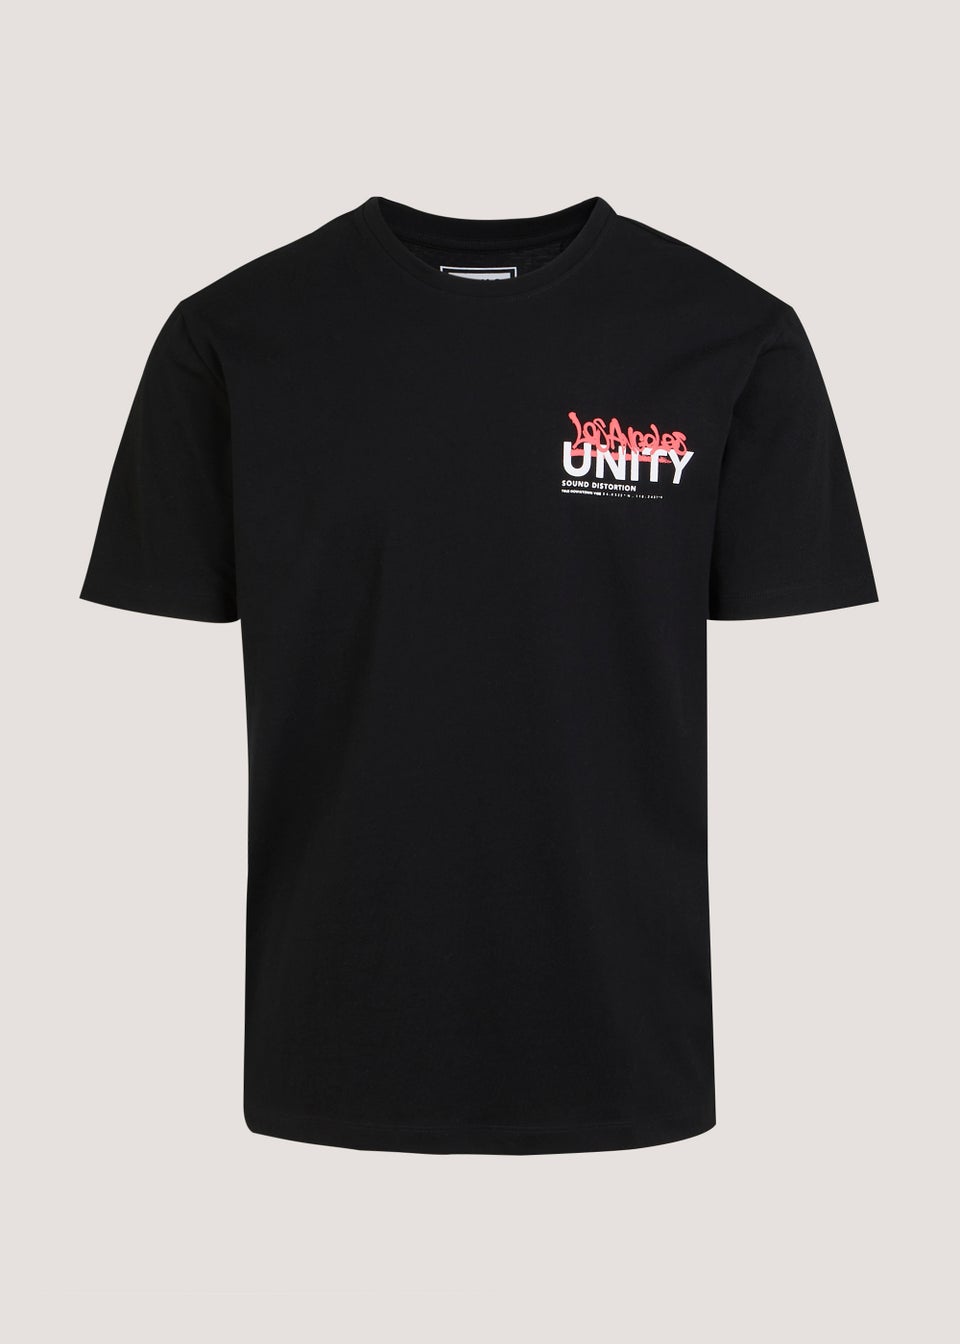 US Athletic Black Graffiti T-Shirt - Matalan